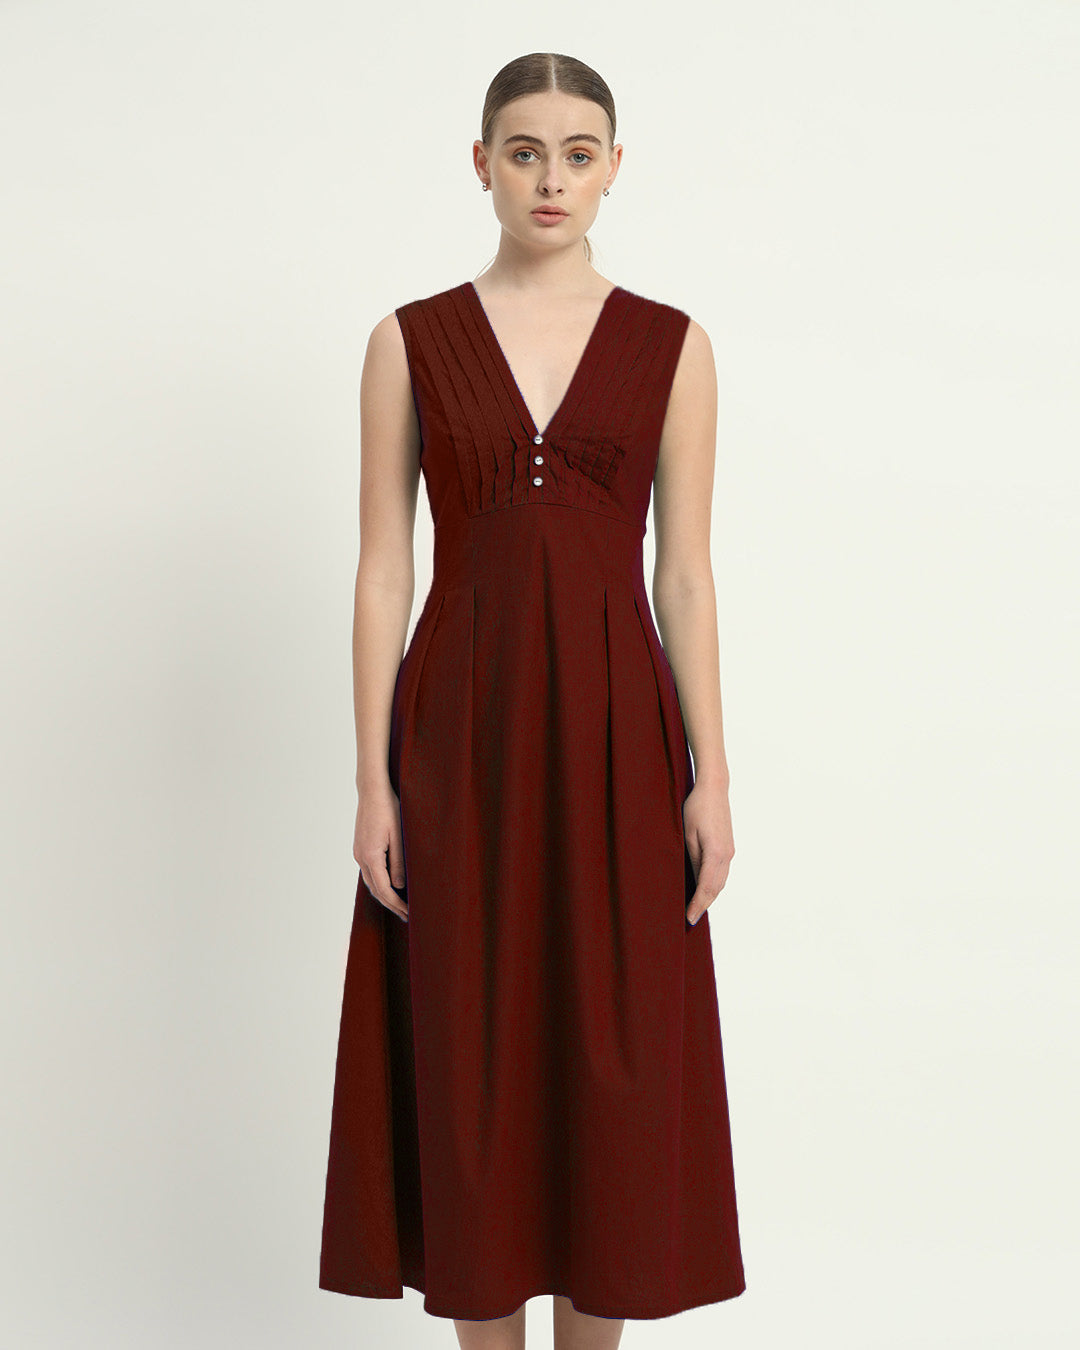 The Rouge Mendoza Cotton Dress